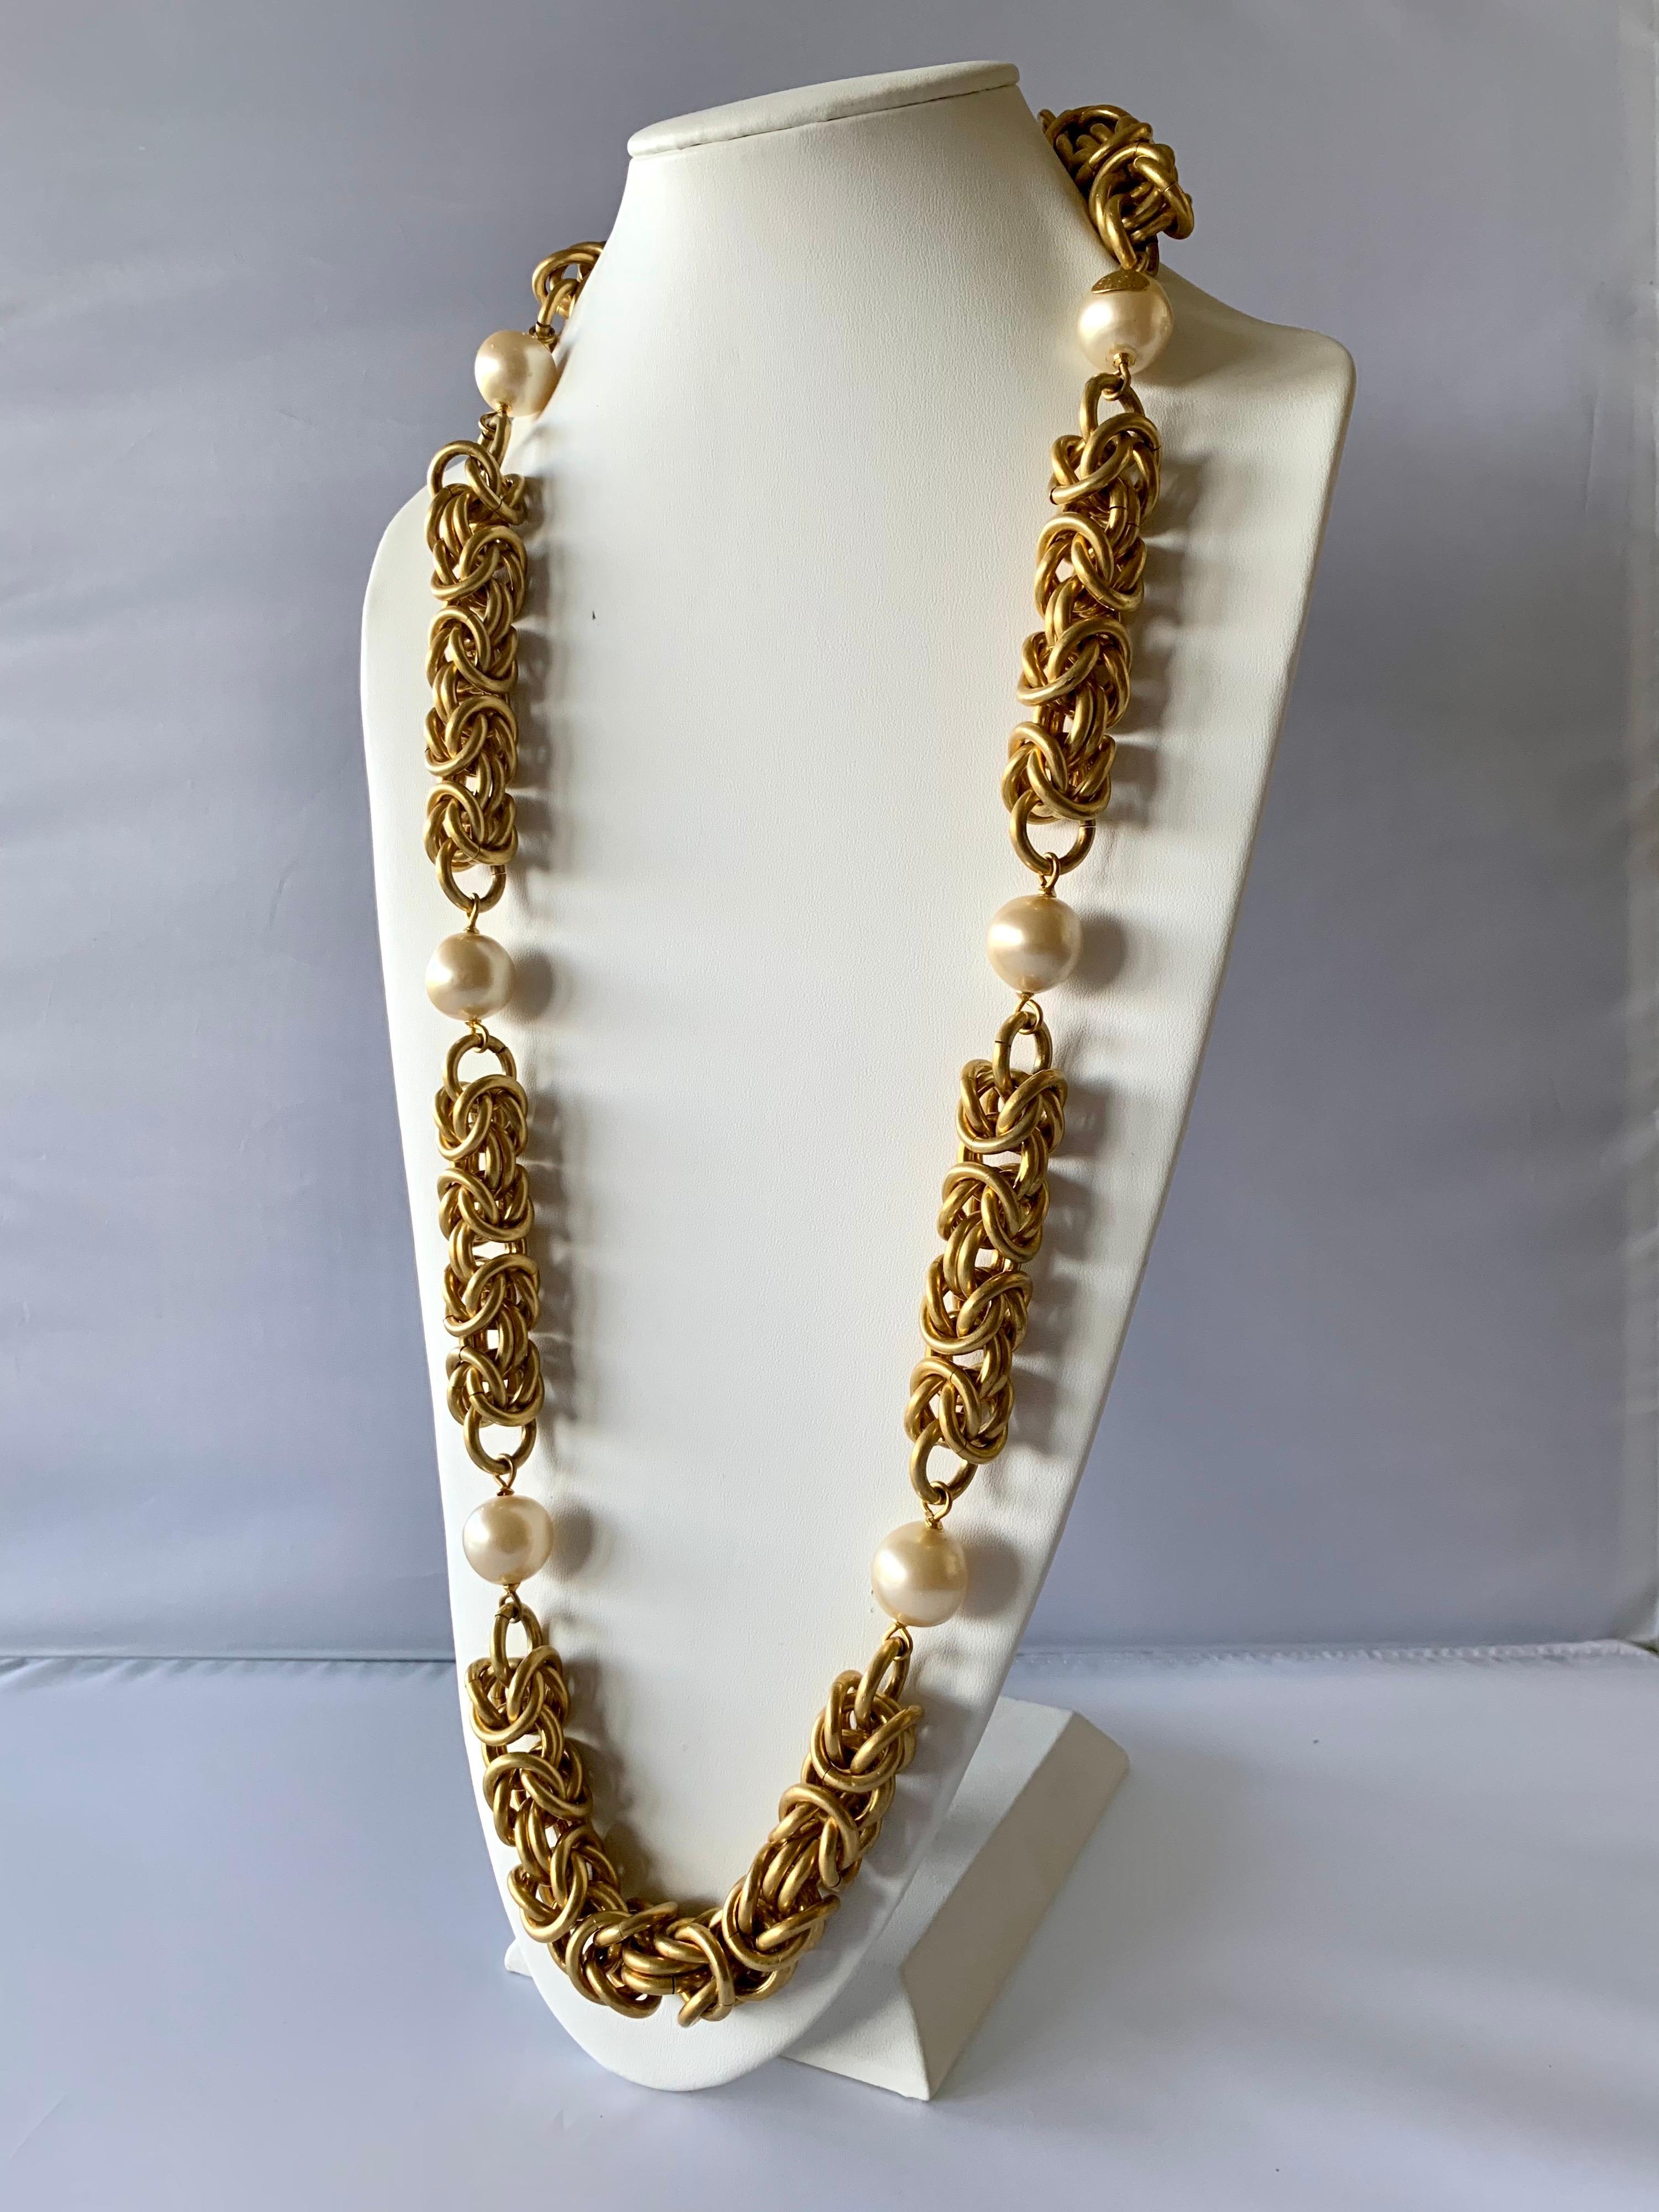 jumbo chain necklace